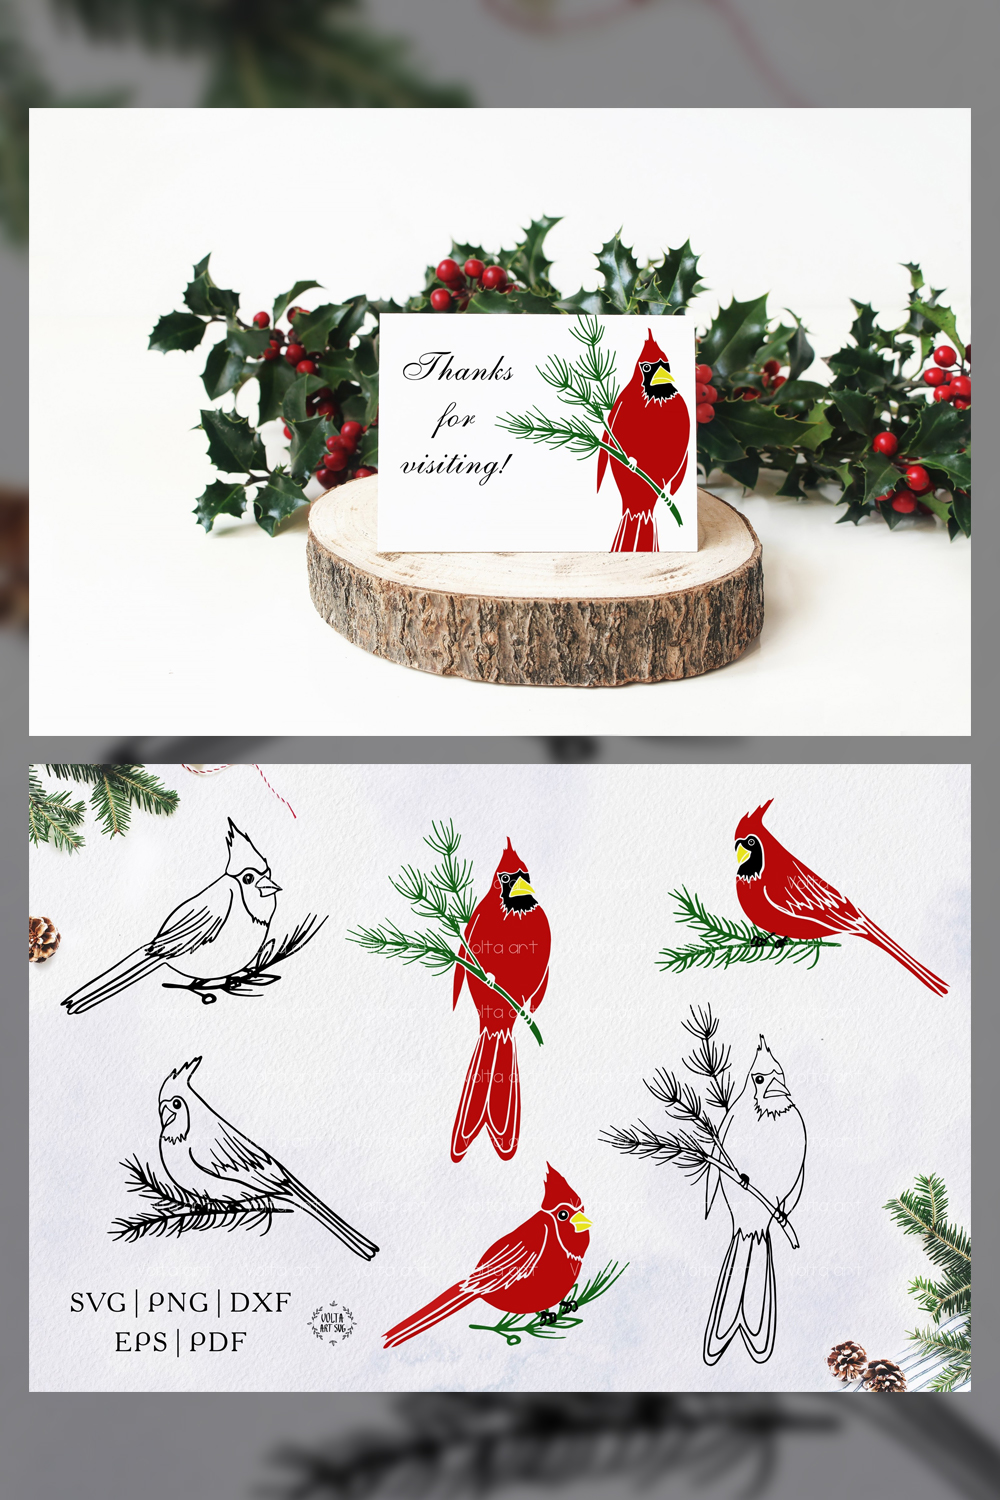 Christmas card with a cardinal on it.